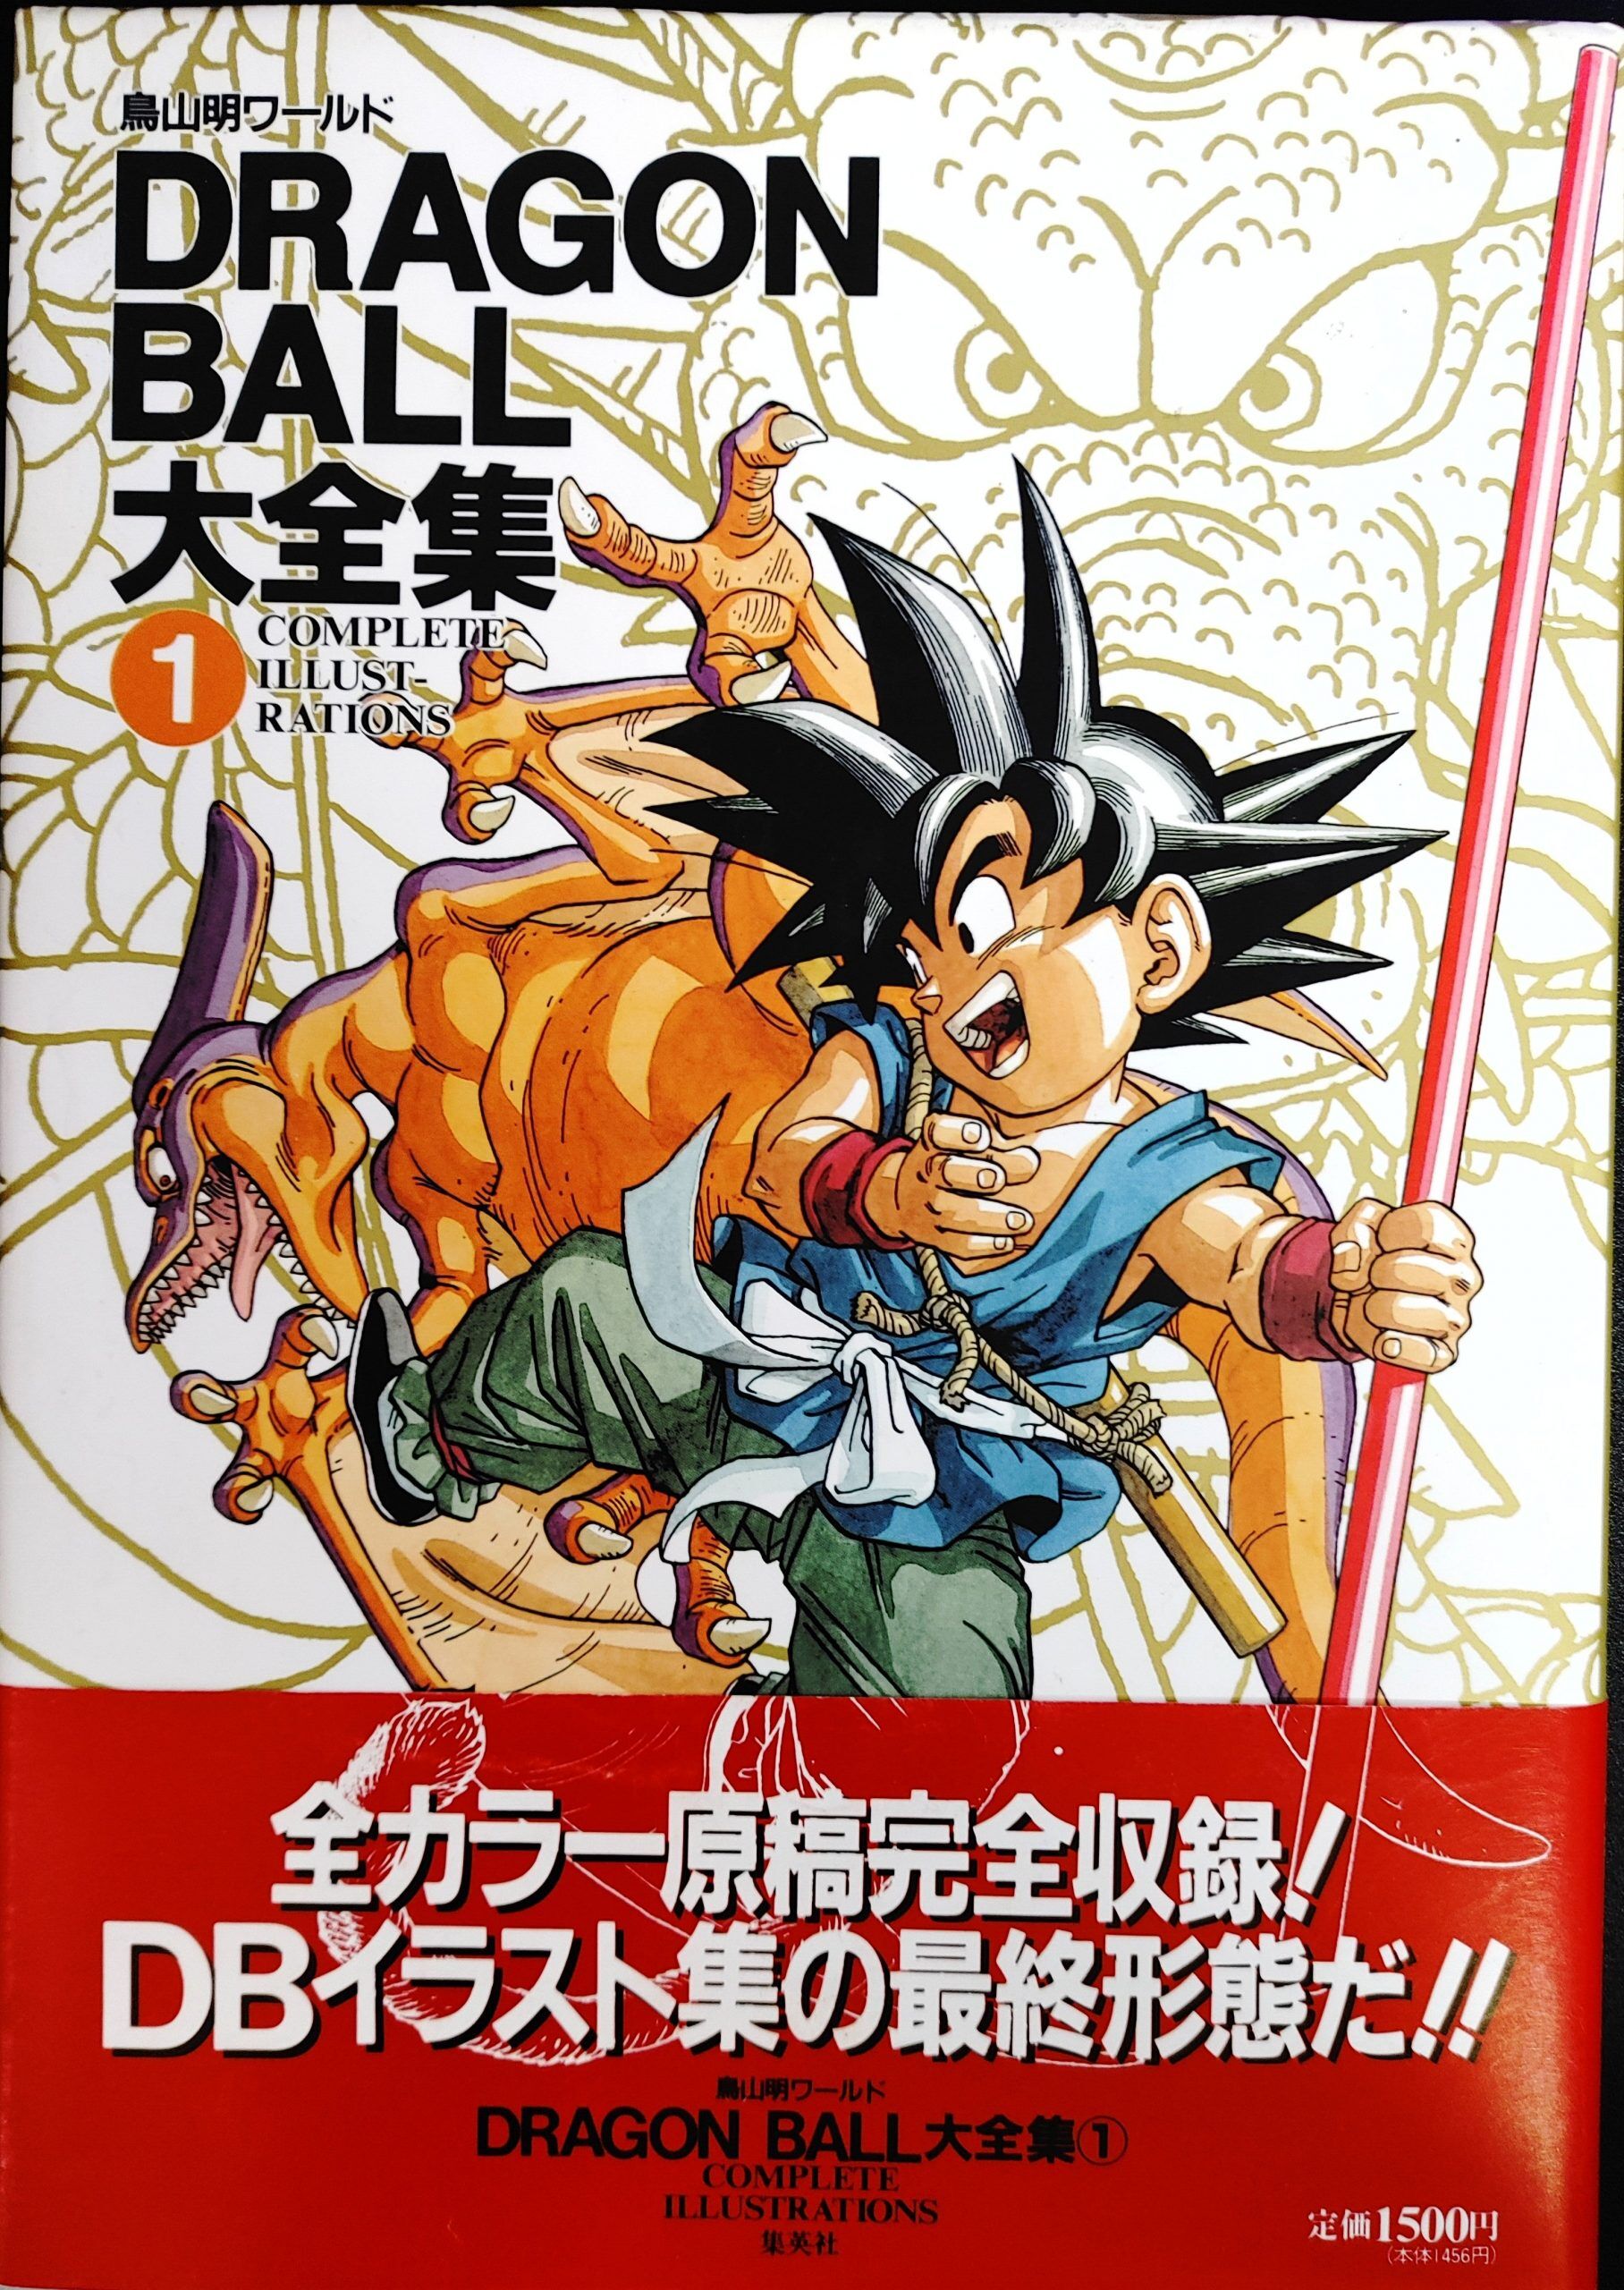 (BOOK) DRAGON BALL DAIZENSHU 1 COMPLETE ILLUSTRATIONS (+Obi/+Poster)